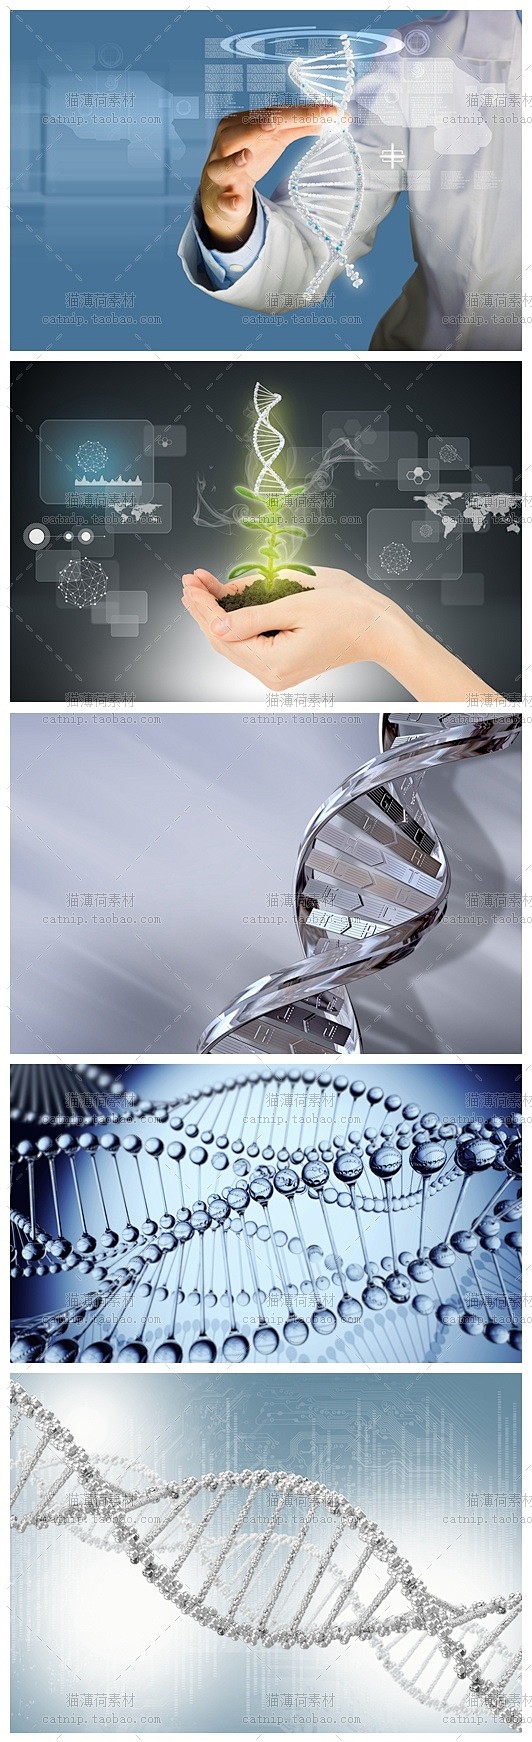 [gq48]25张DNA锁链图遗传医疗生...